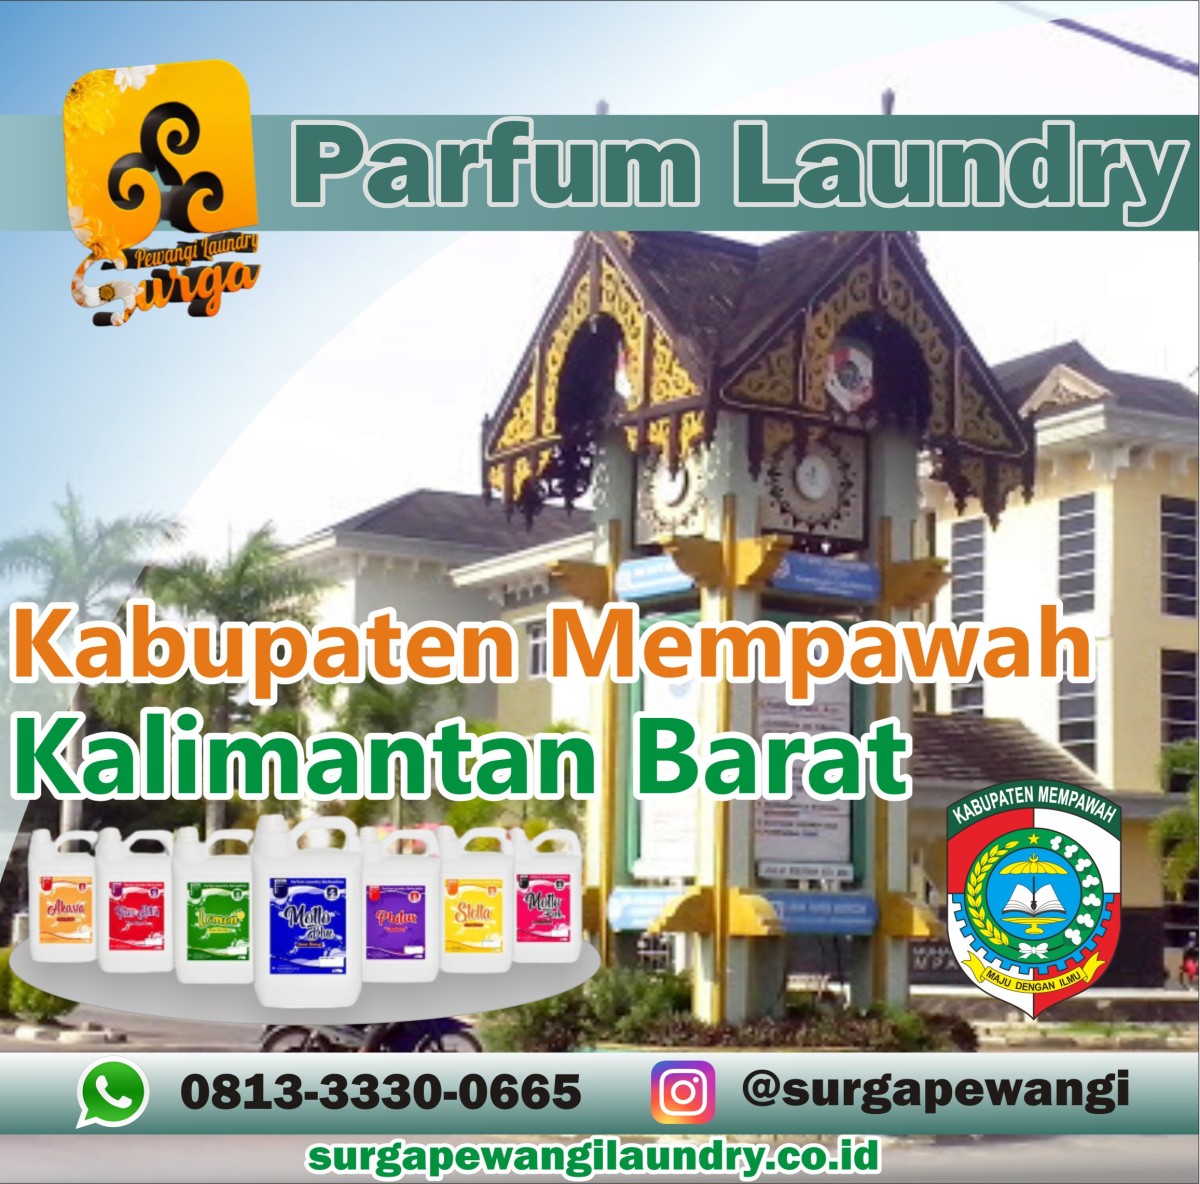 Parfum Laundry Kabupaten Mempawah, Kalimantan Barat